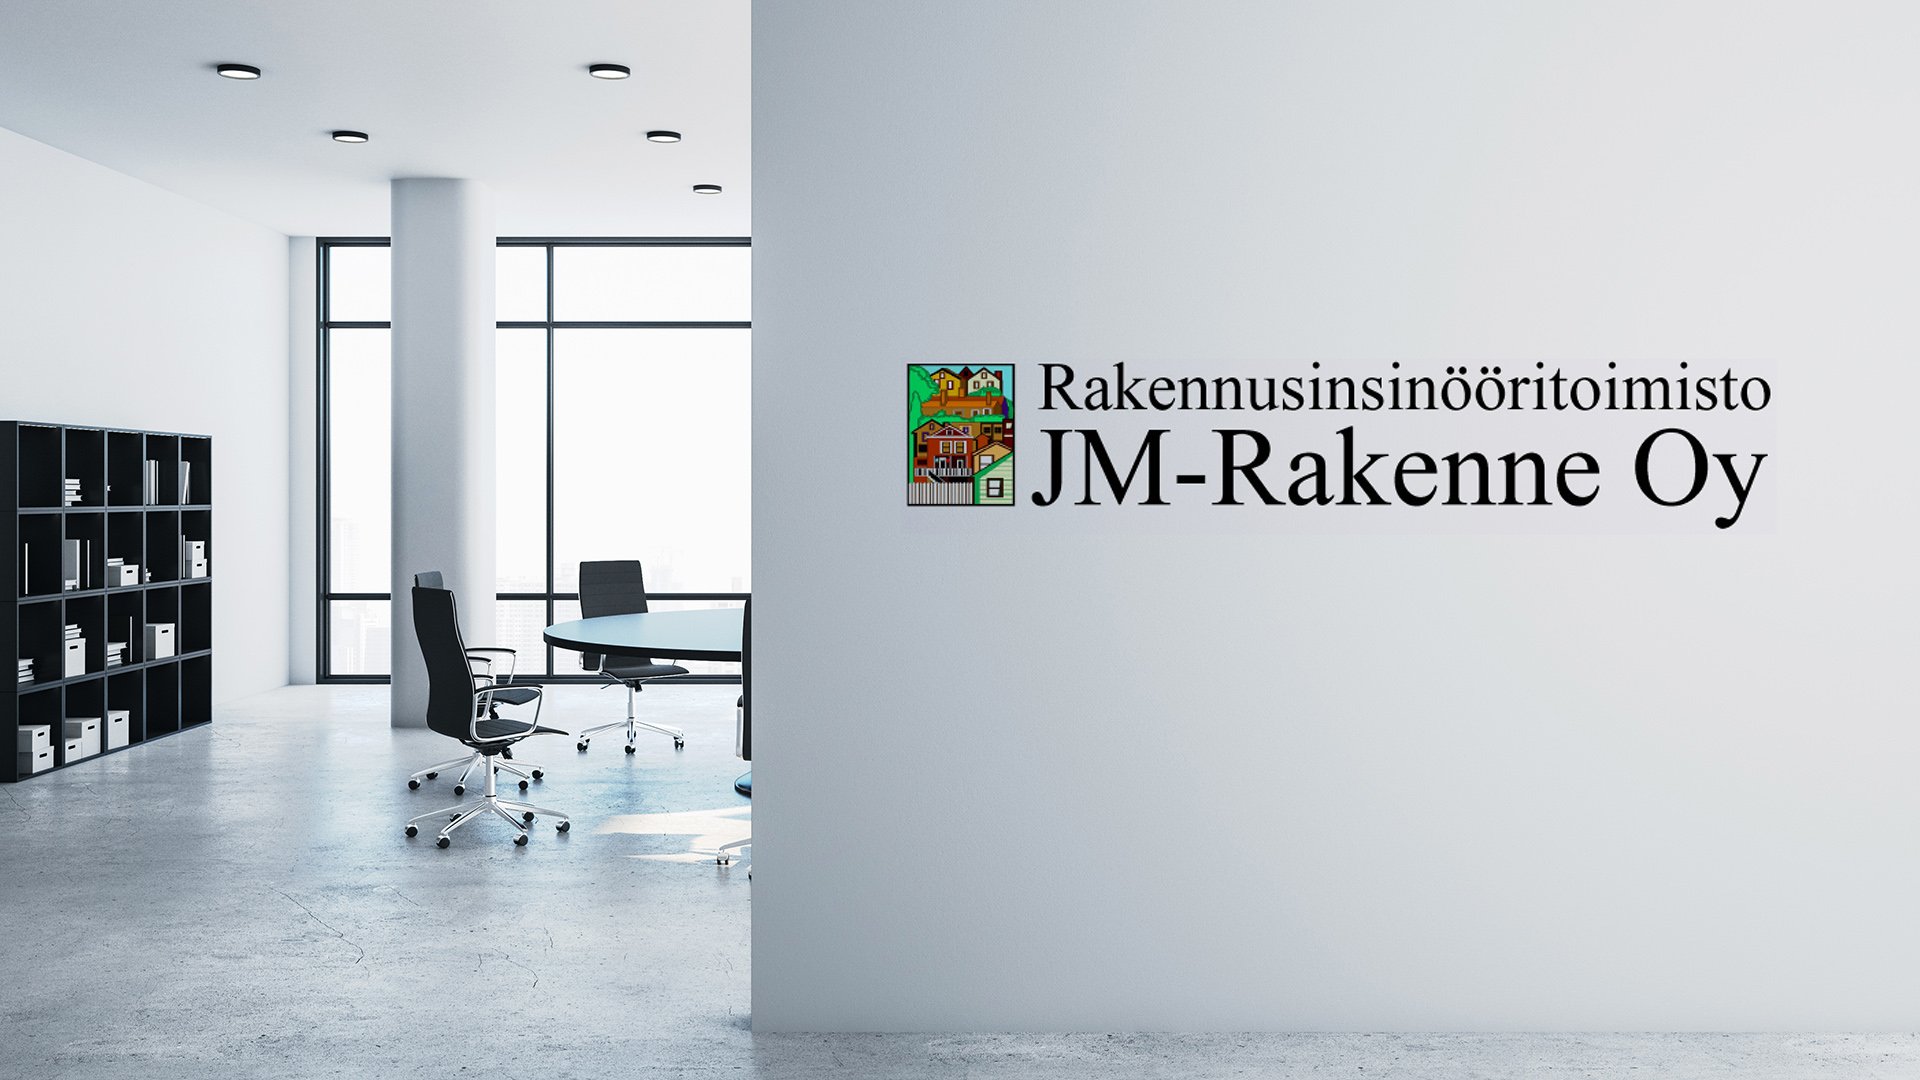 South Ostrobothnian wood construction expert JM-Rakenne joins AINS Group